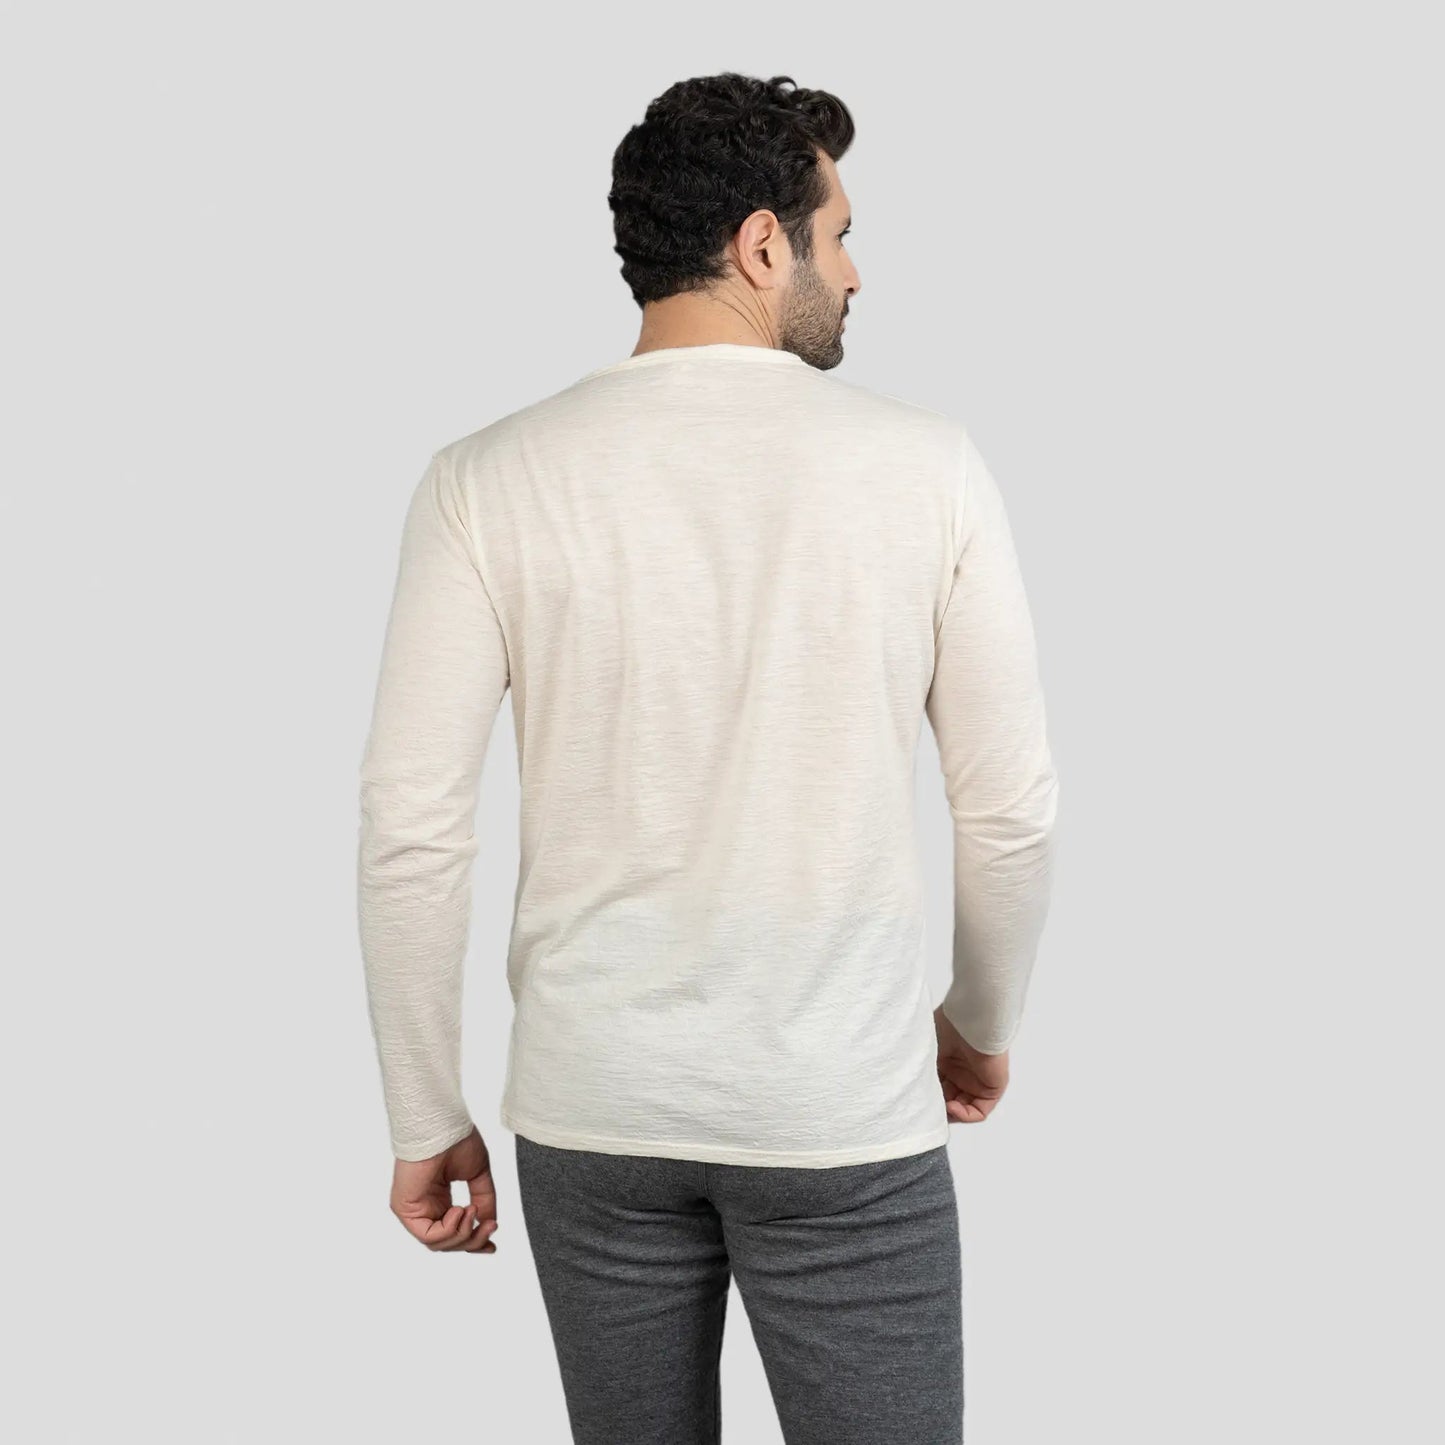 Men's Alpaca Wool Long Sleeve Base Layer: 110 Ultralight color Natural White